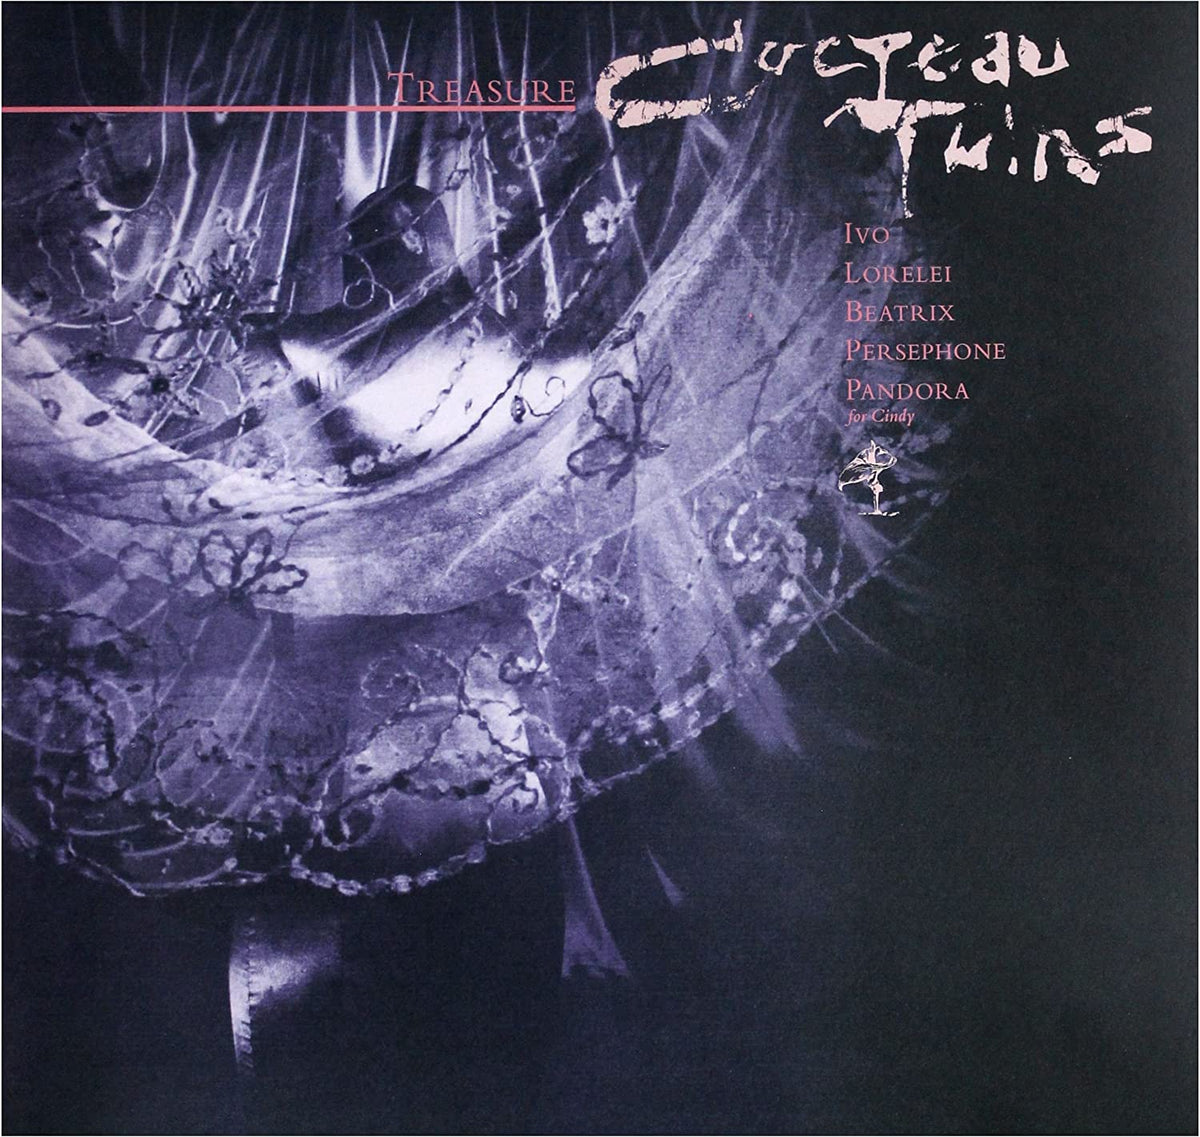 Cocteau Twins – Treasure (LP)